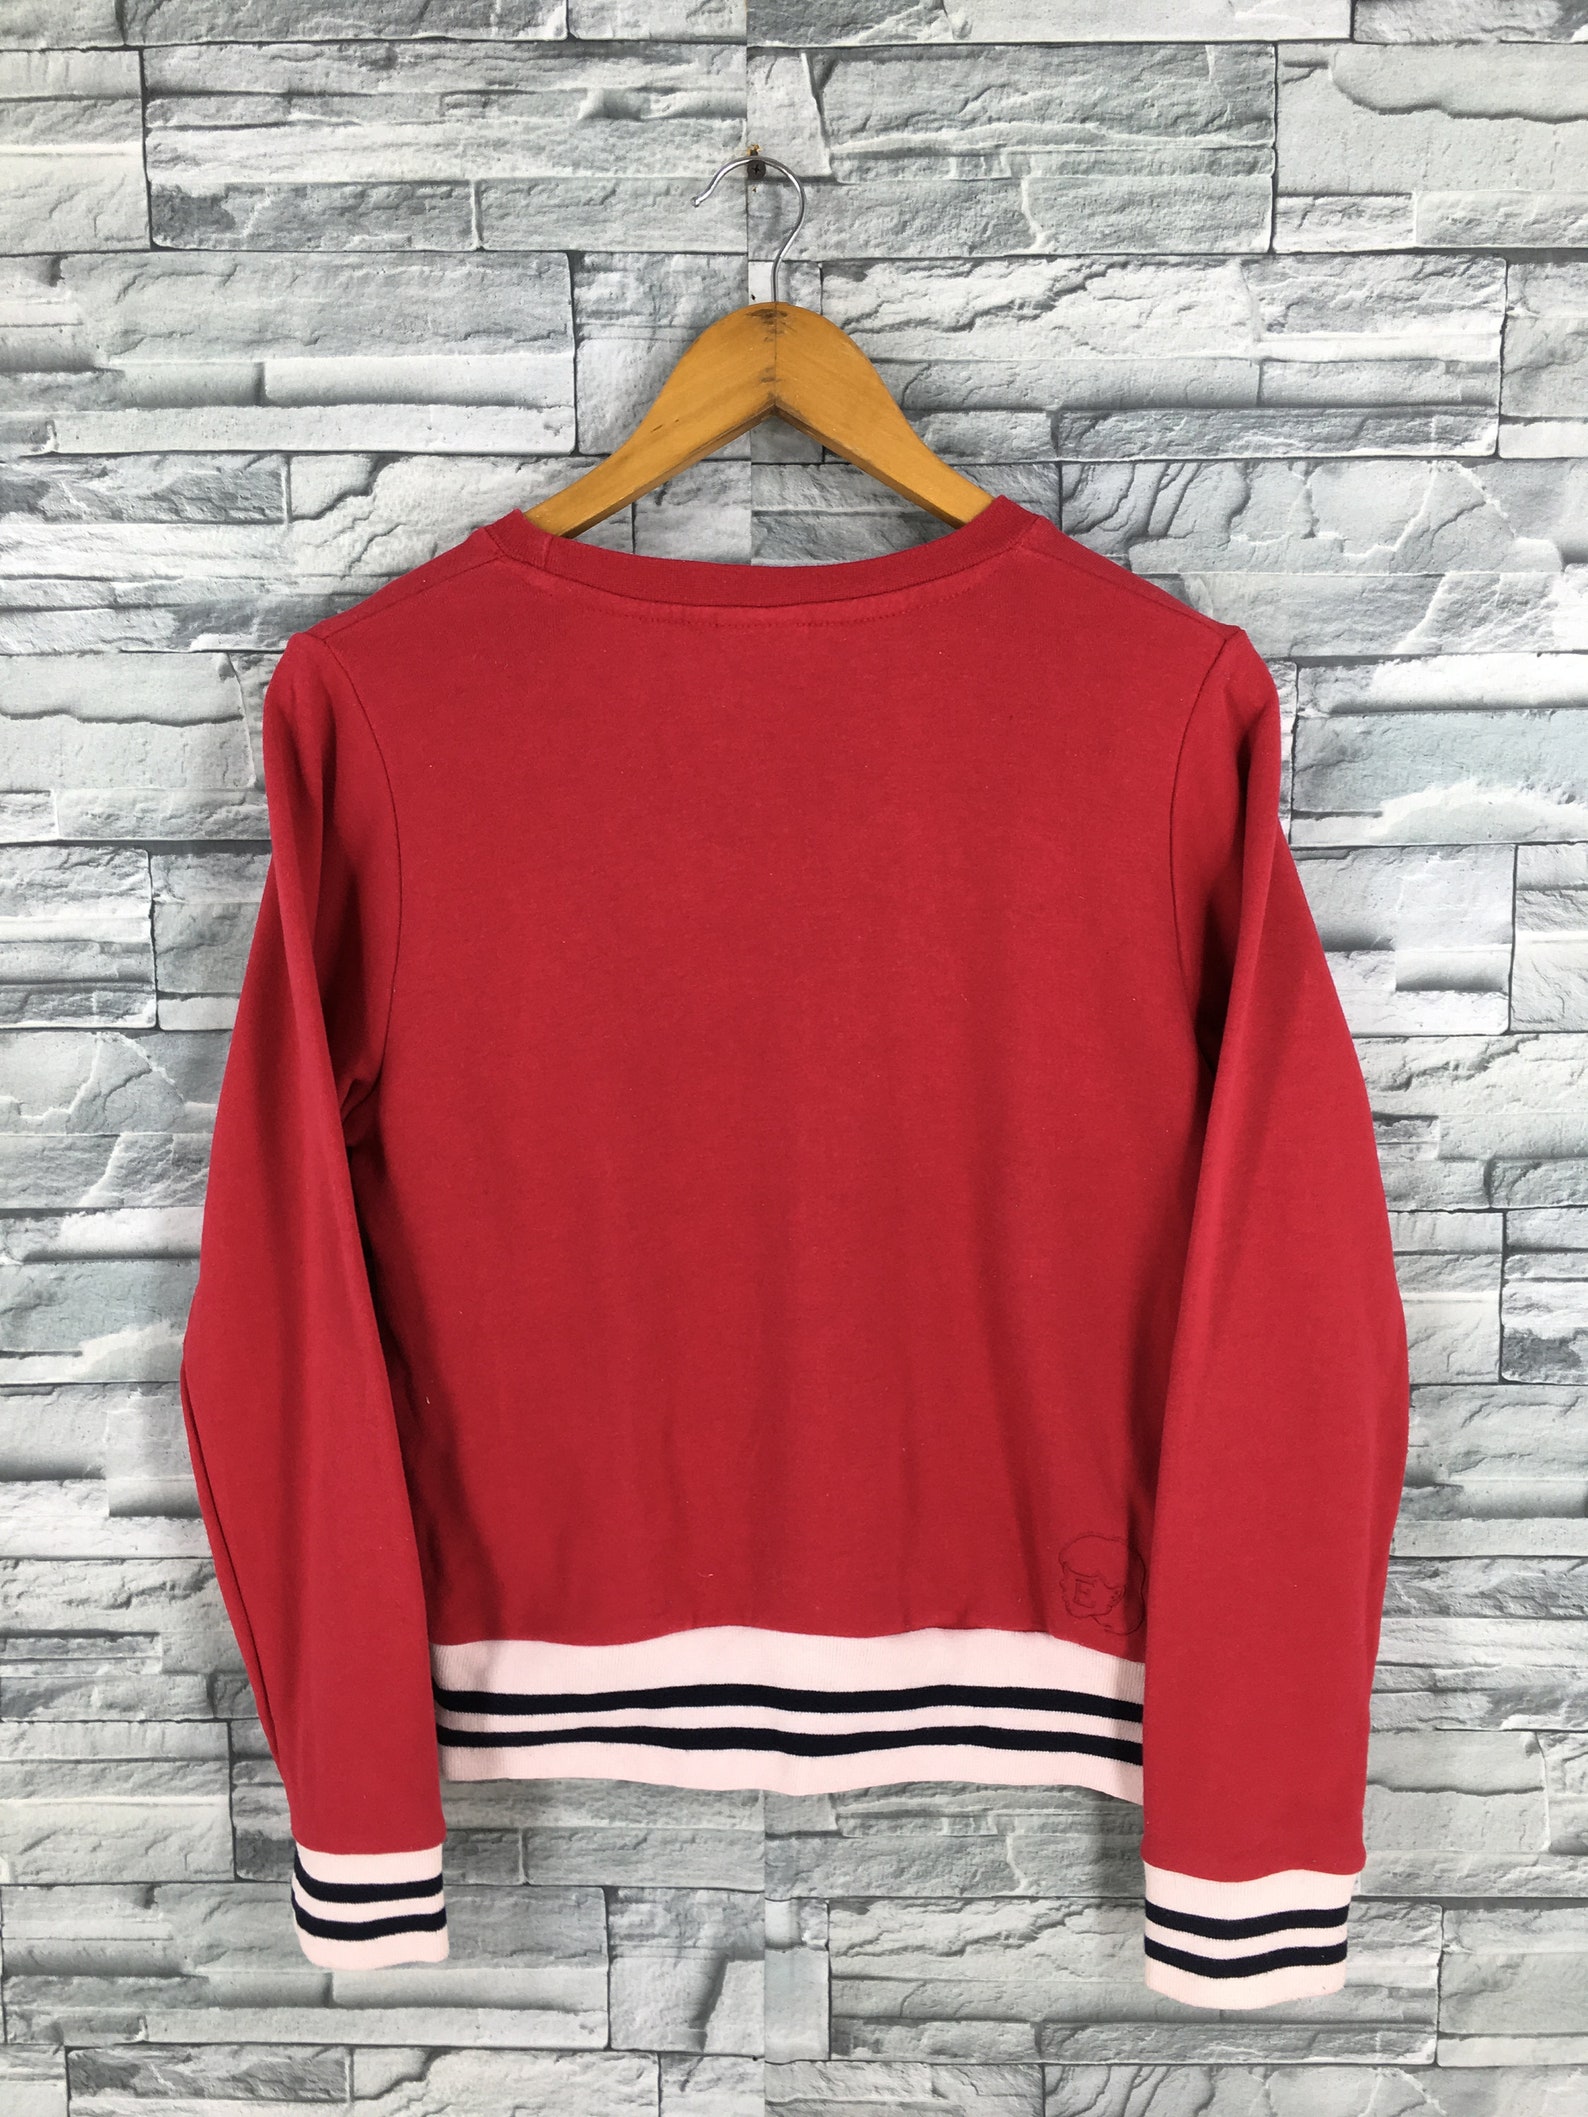 Fila Sweater Jumper Red Small Fila Italia Sportswear Sweater - Etsy UK